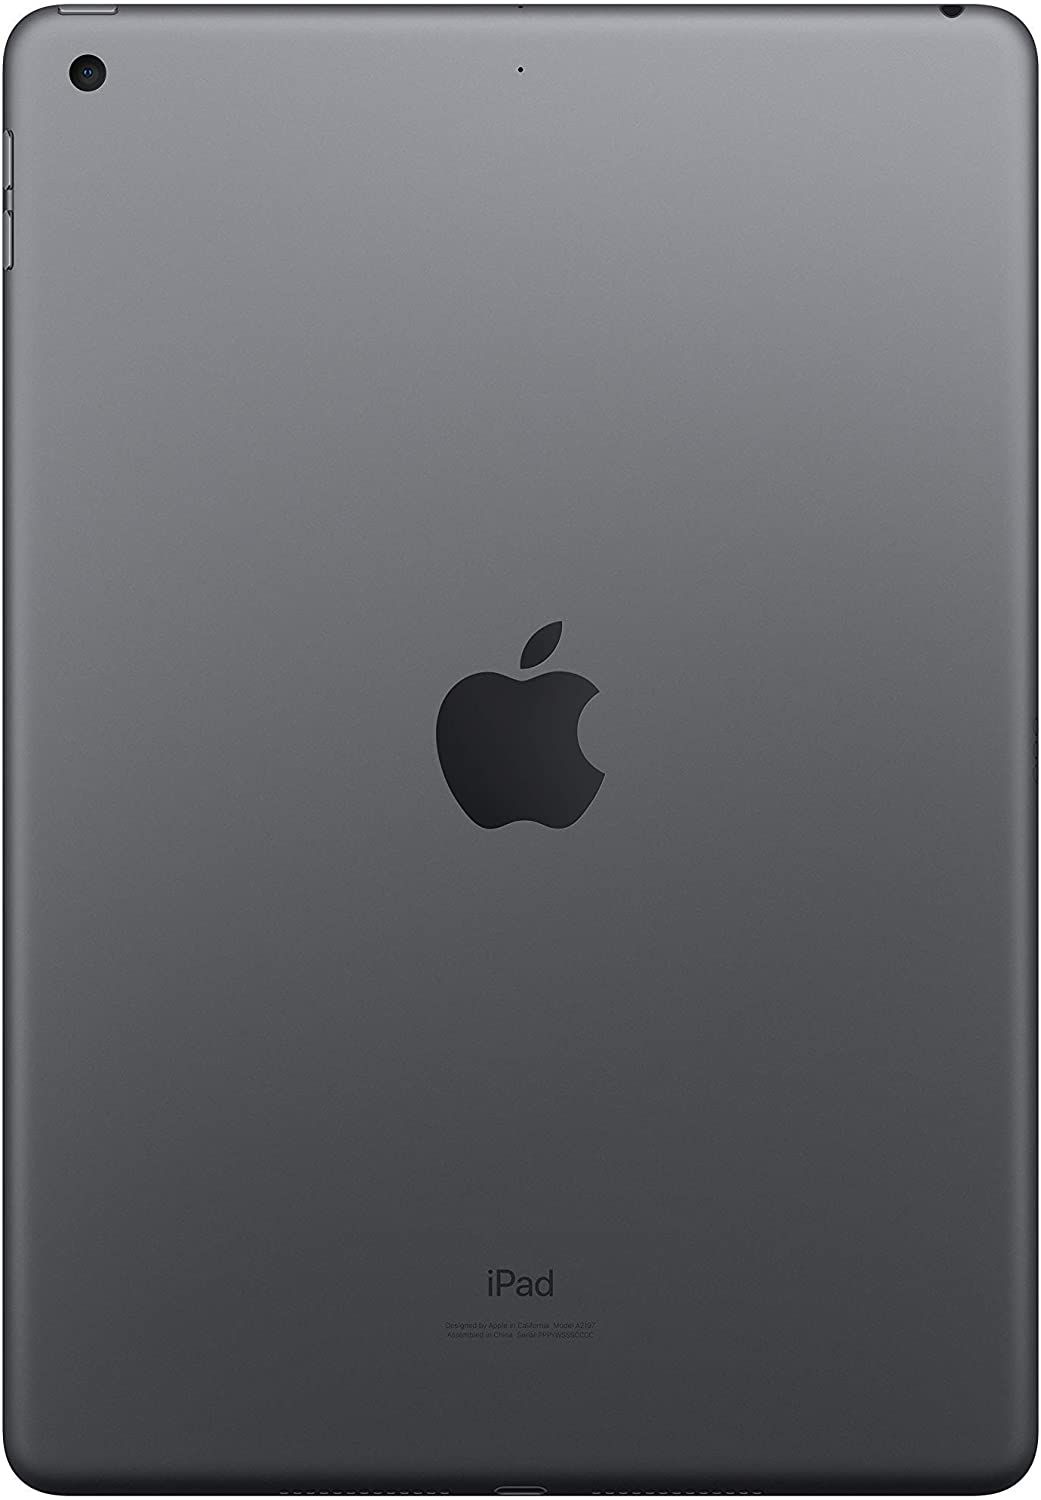 iPad 第7世代 32GB 美品 Wi-Fi ゴールド A2197 10.2インチ 2019年 iPad7 本体 タブレット アイパッド アップル apple【送料無料】 ipd7mtm2223